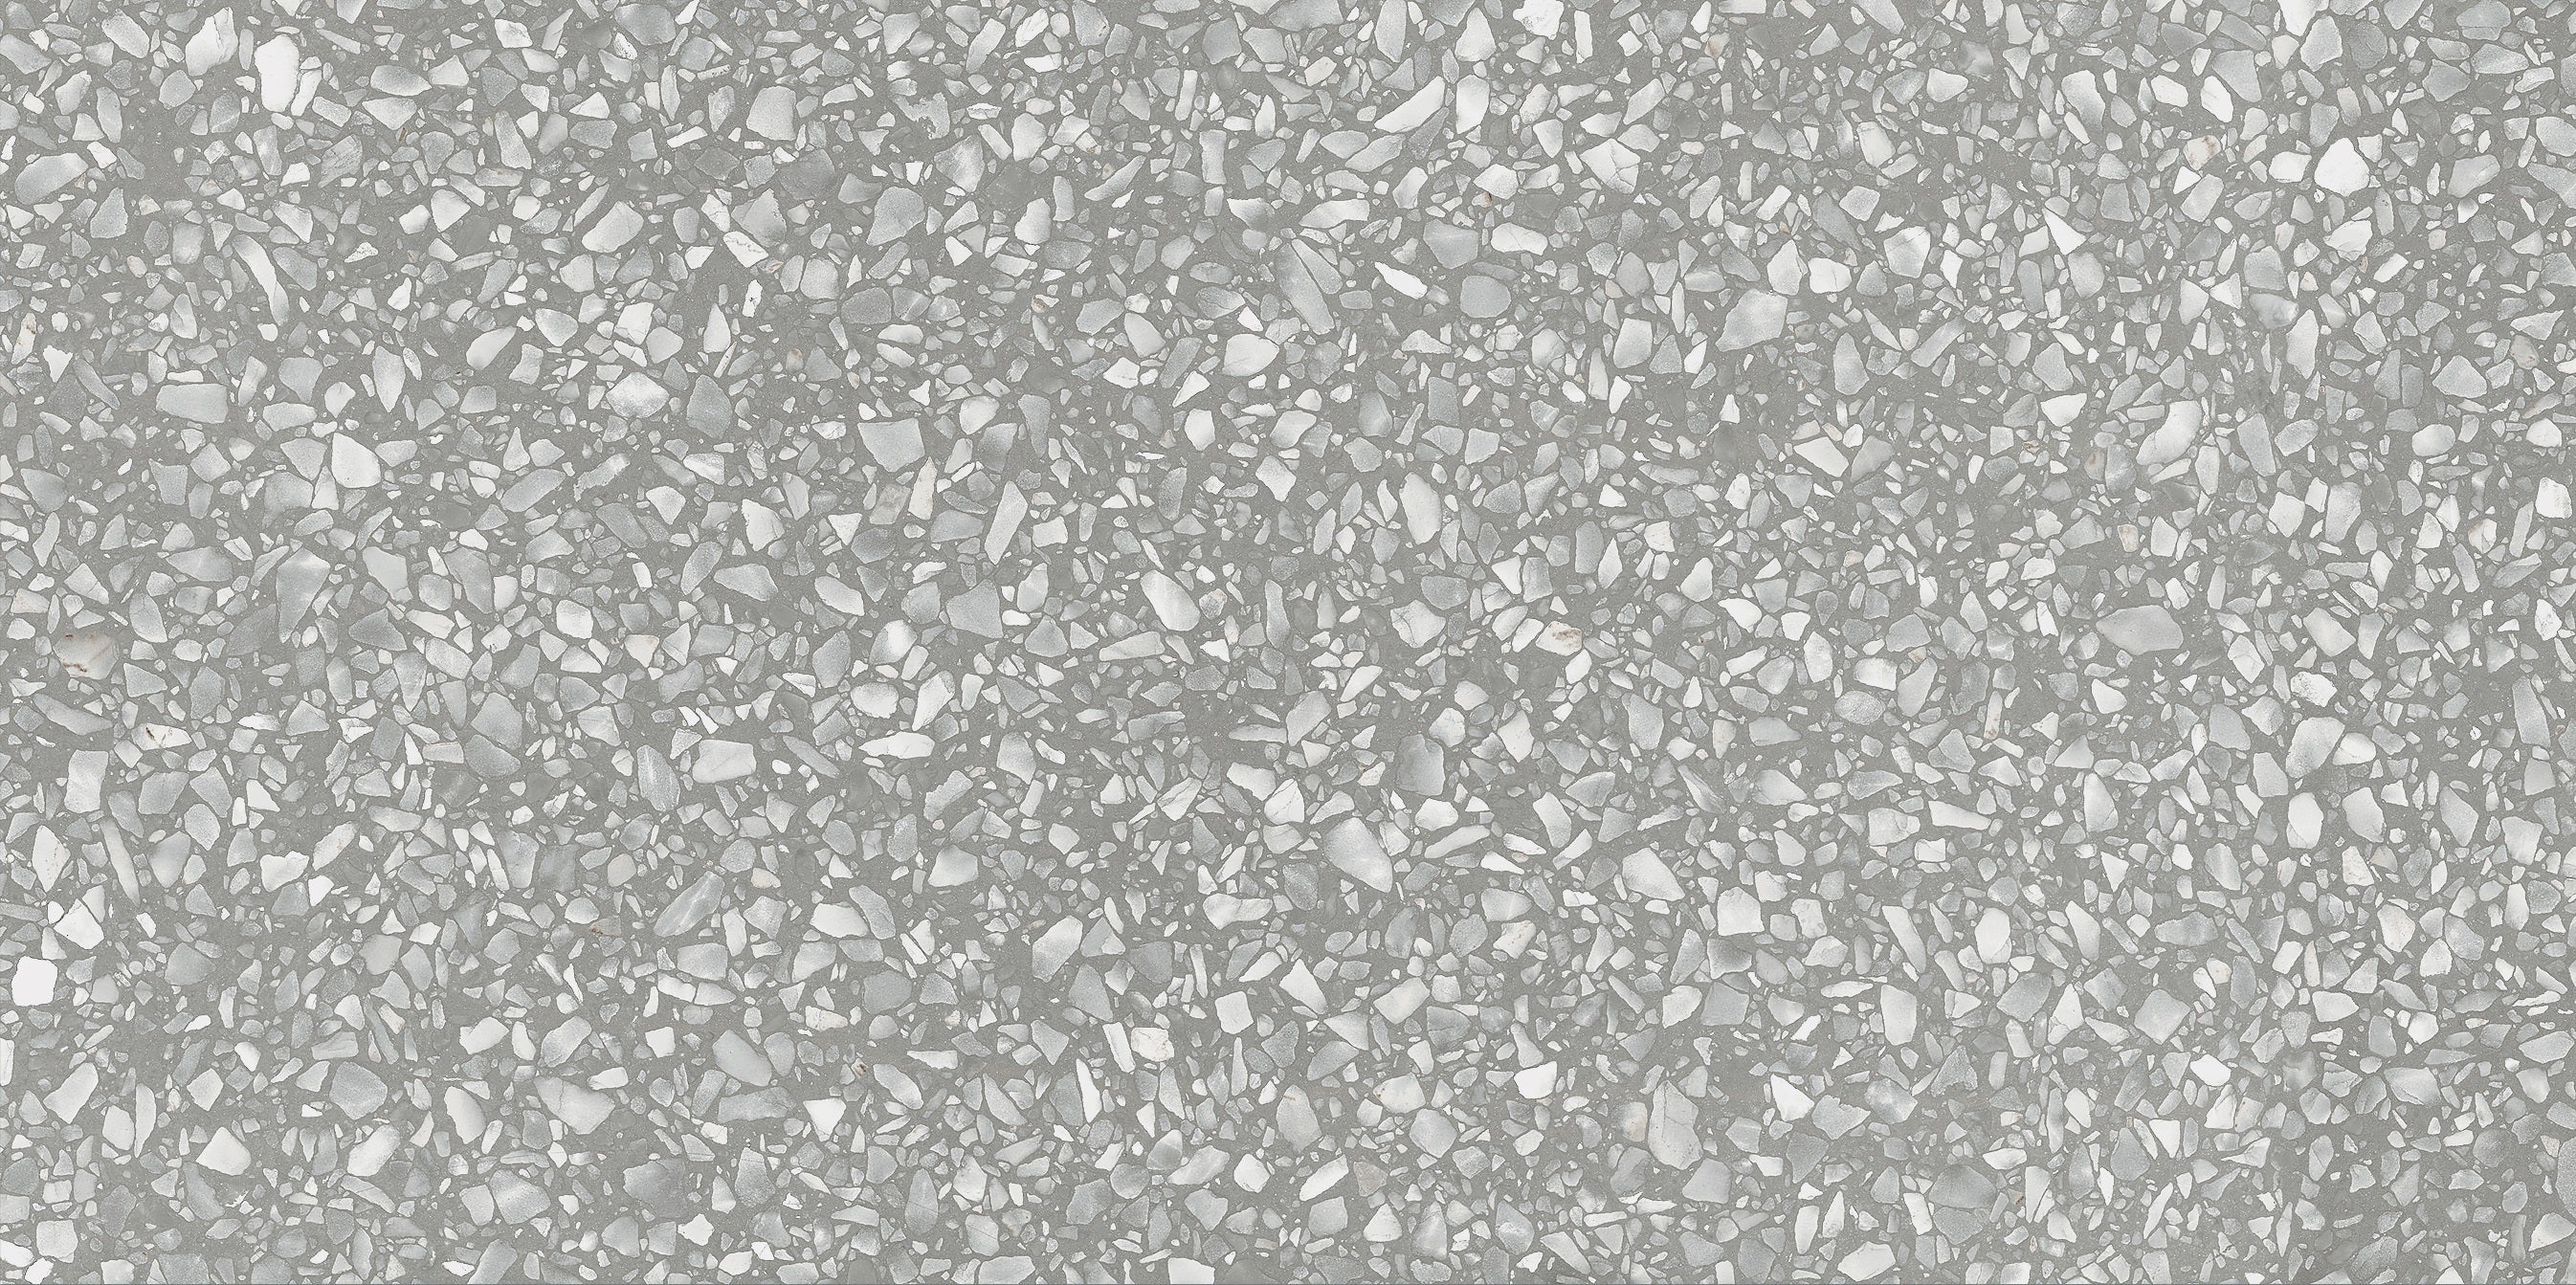 landmark 9mm elite fashion grey field tile 12x24x9mm matte rectified porcelain tile distributed by surface group international